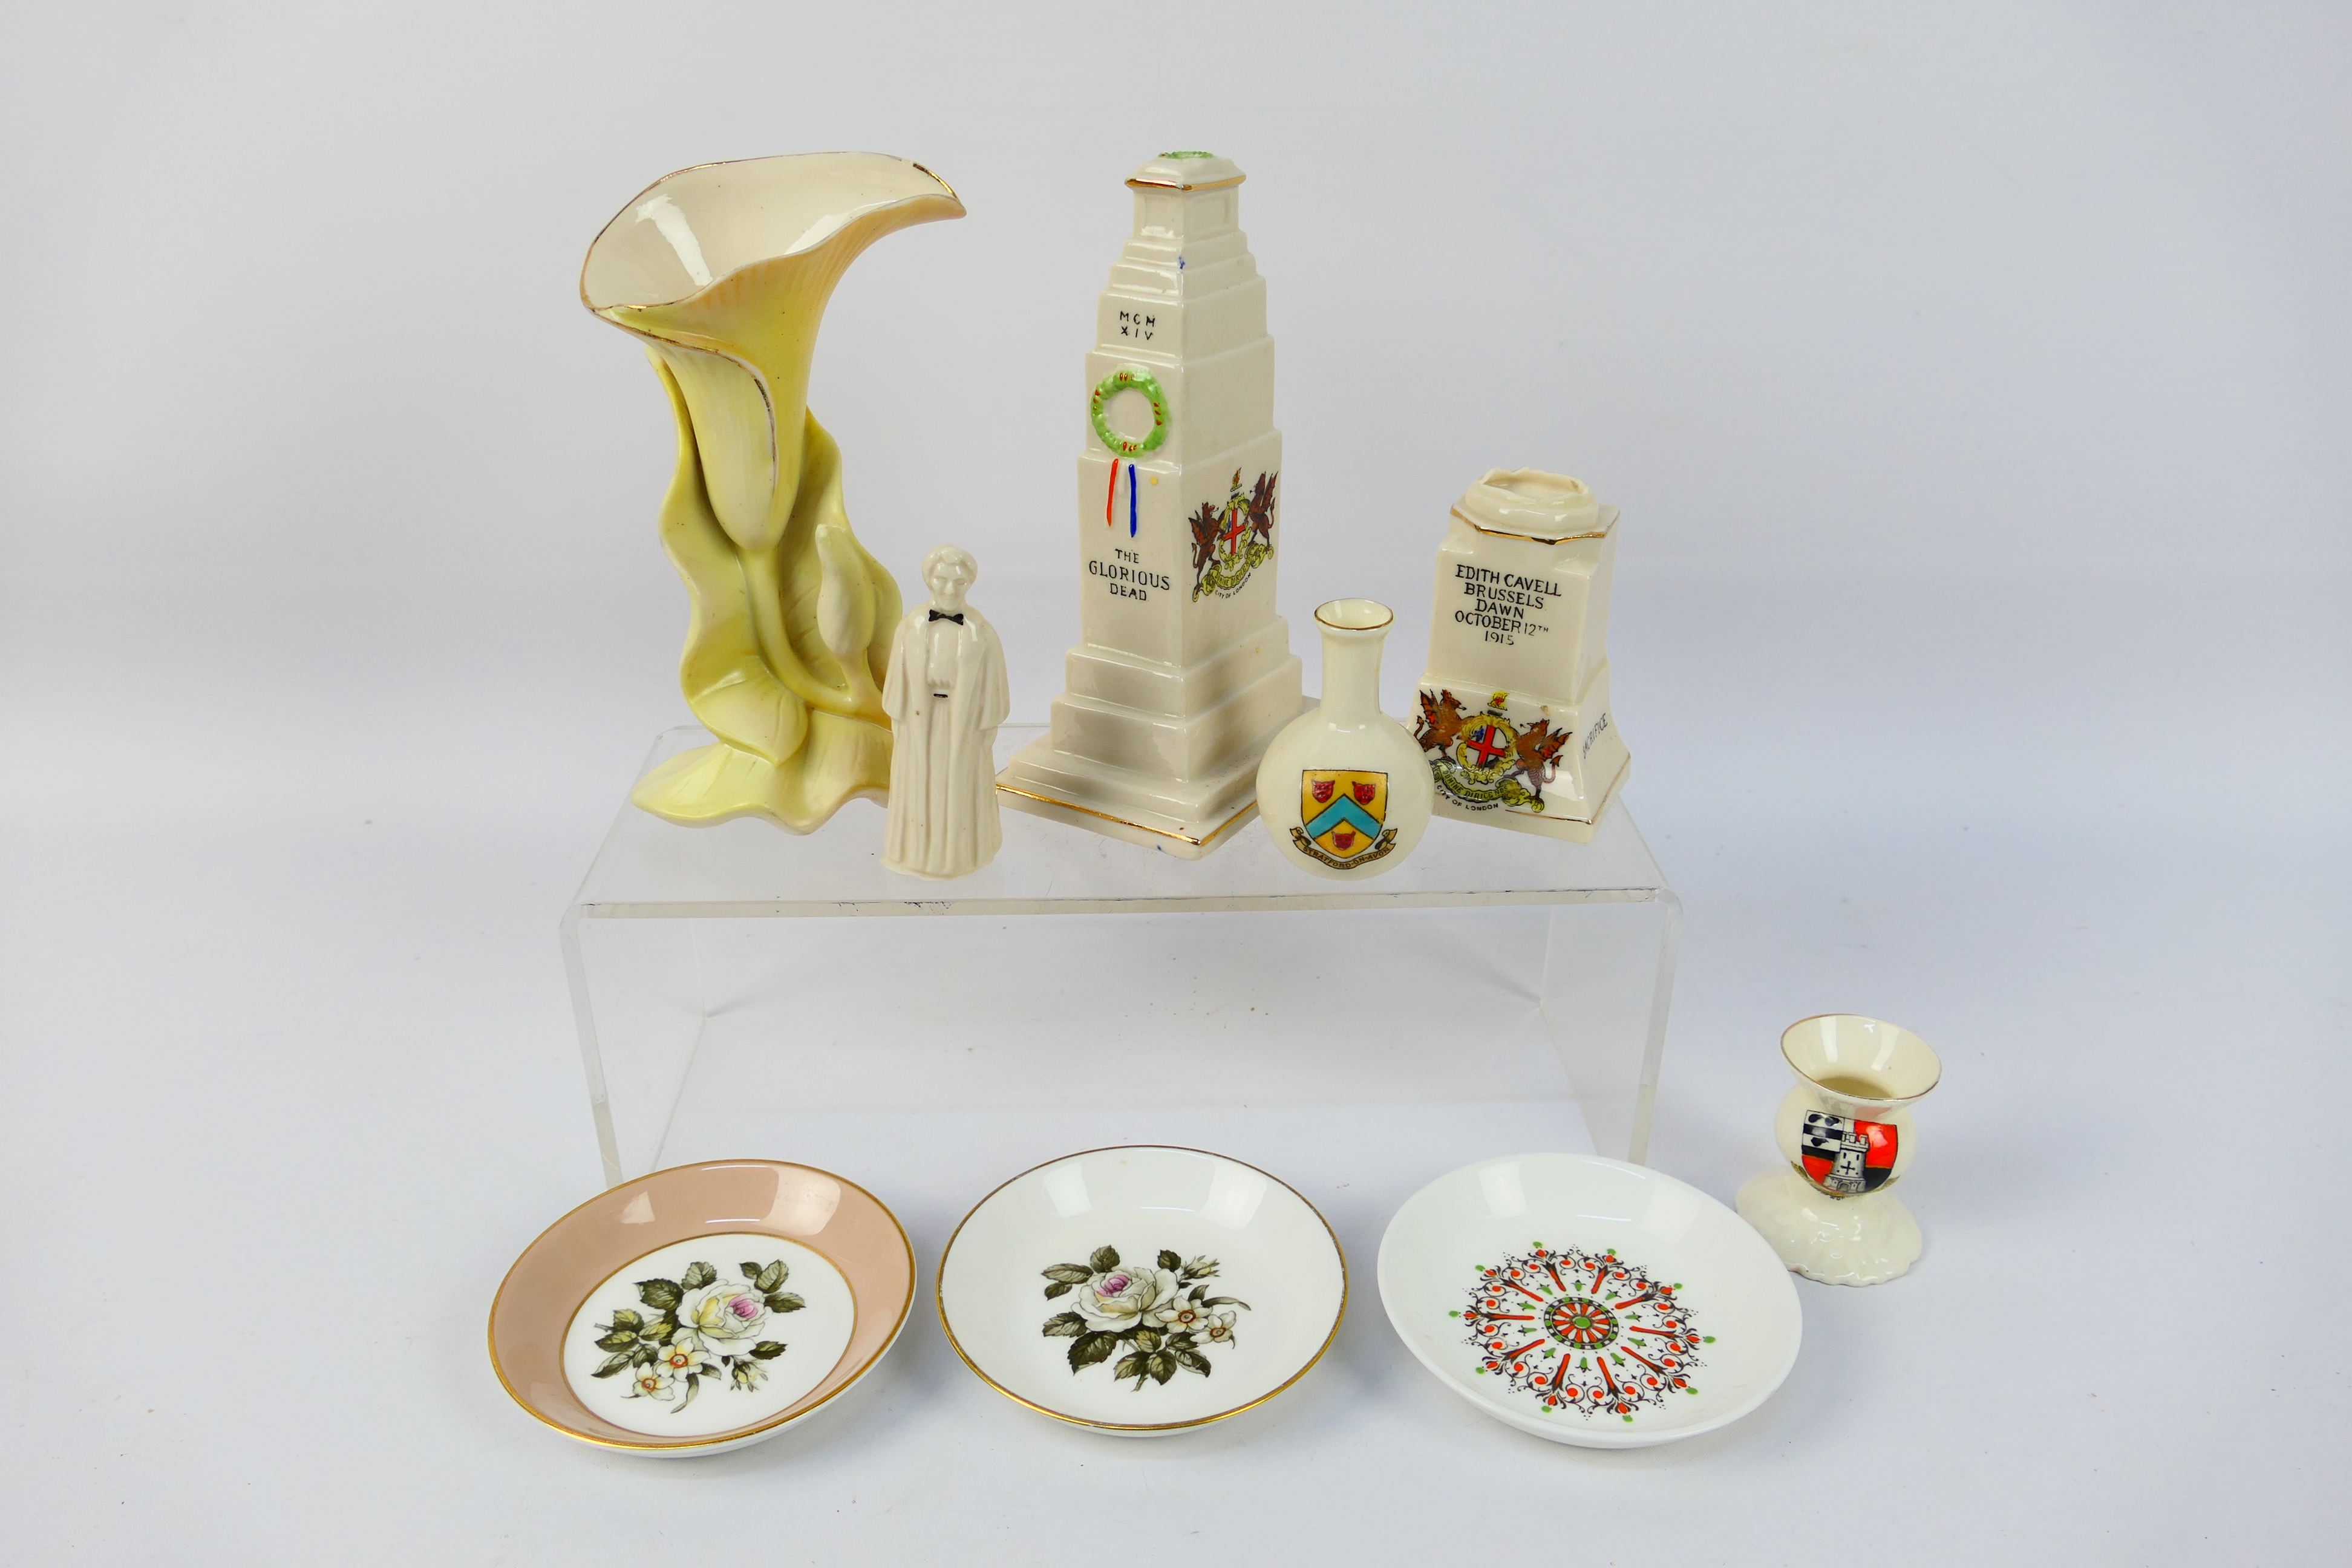 A Robinson & Leadbeater Royal ivory Porcelain floral study, 16 cm (h),